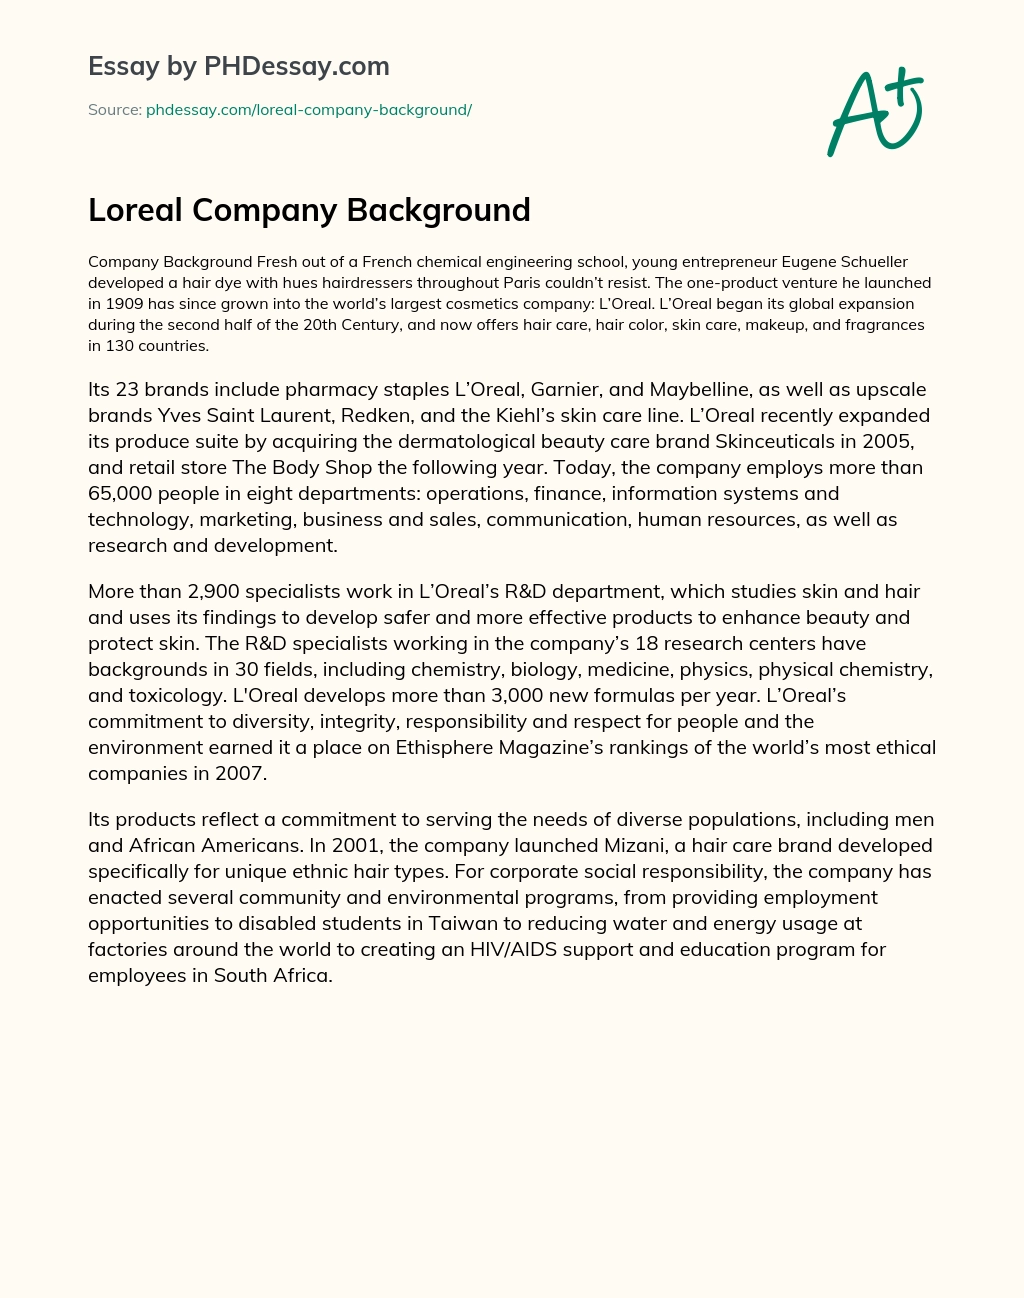 Loreal Company Background essay